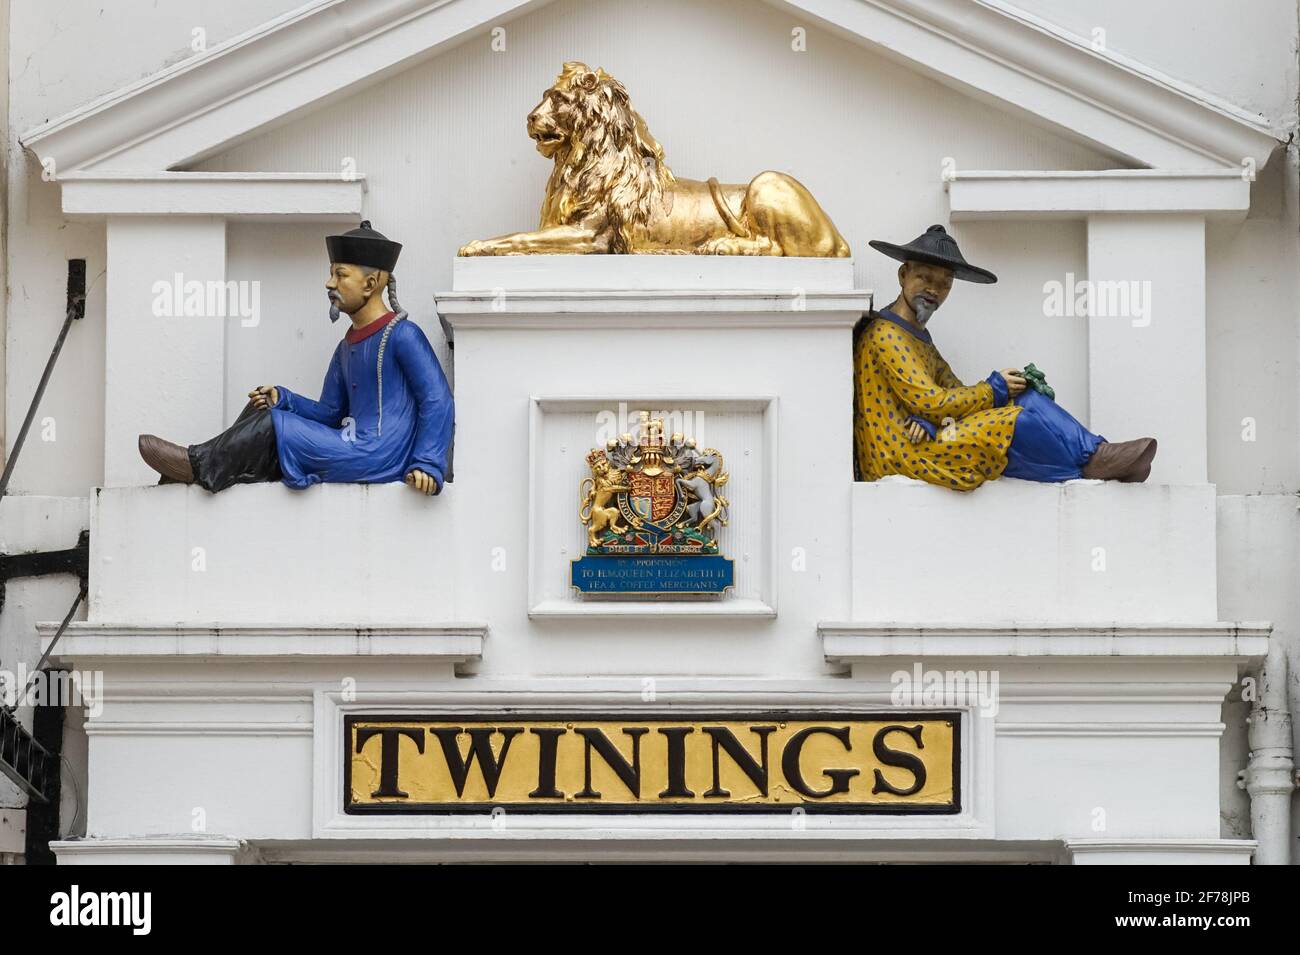 Twinings shop and museum on Strand, London, UK Stock Photo